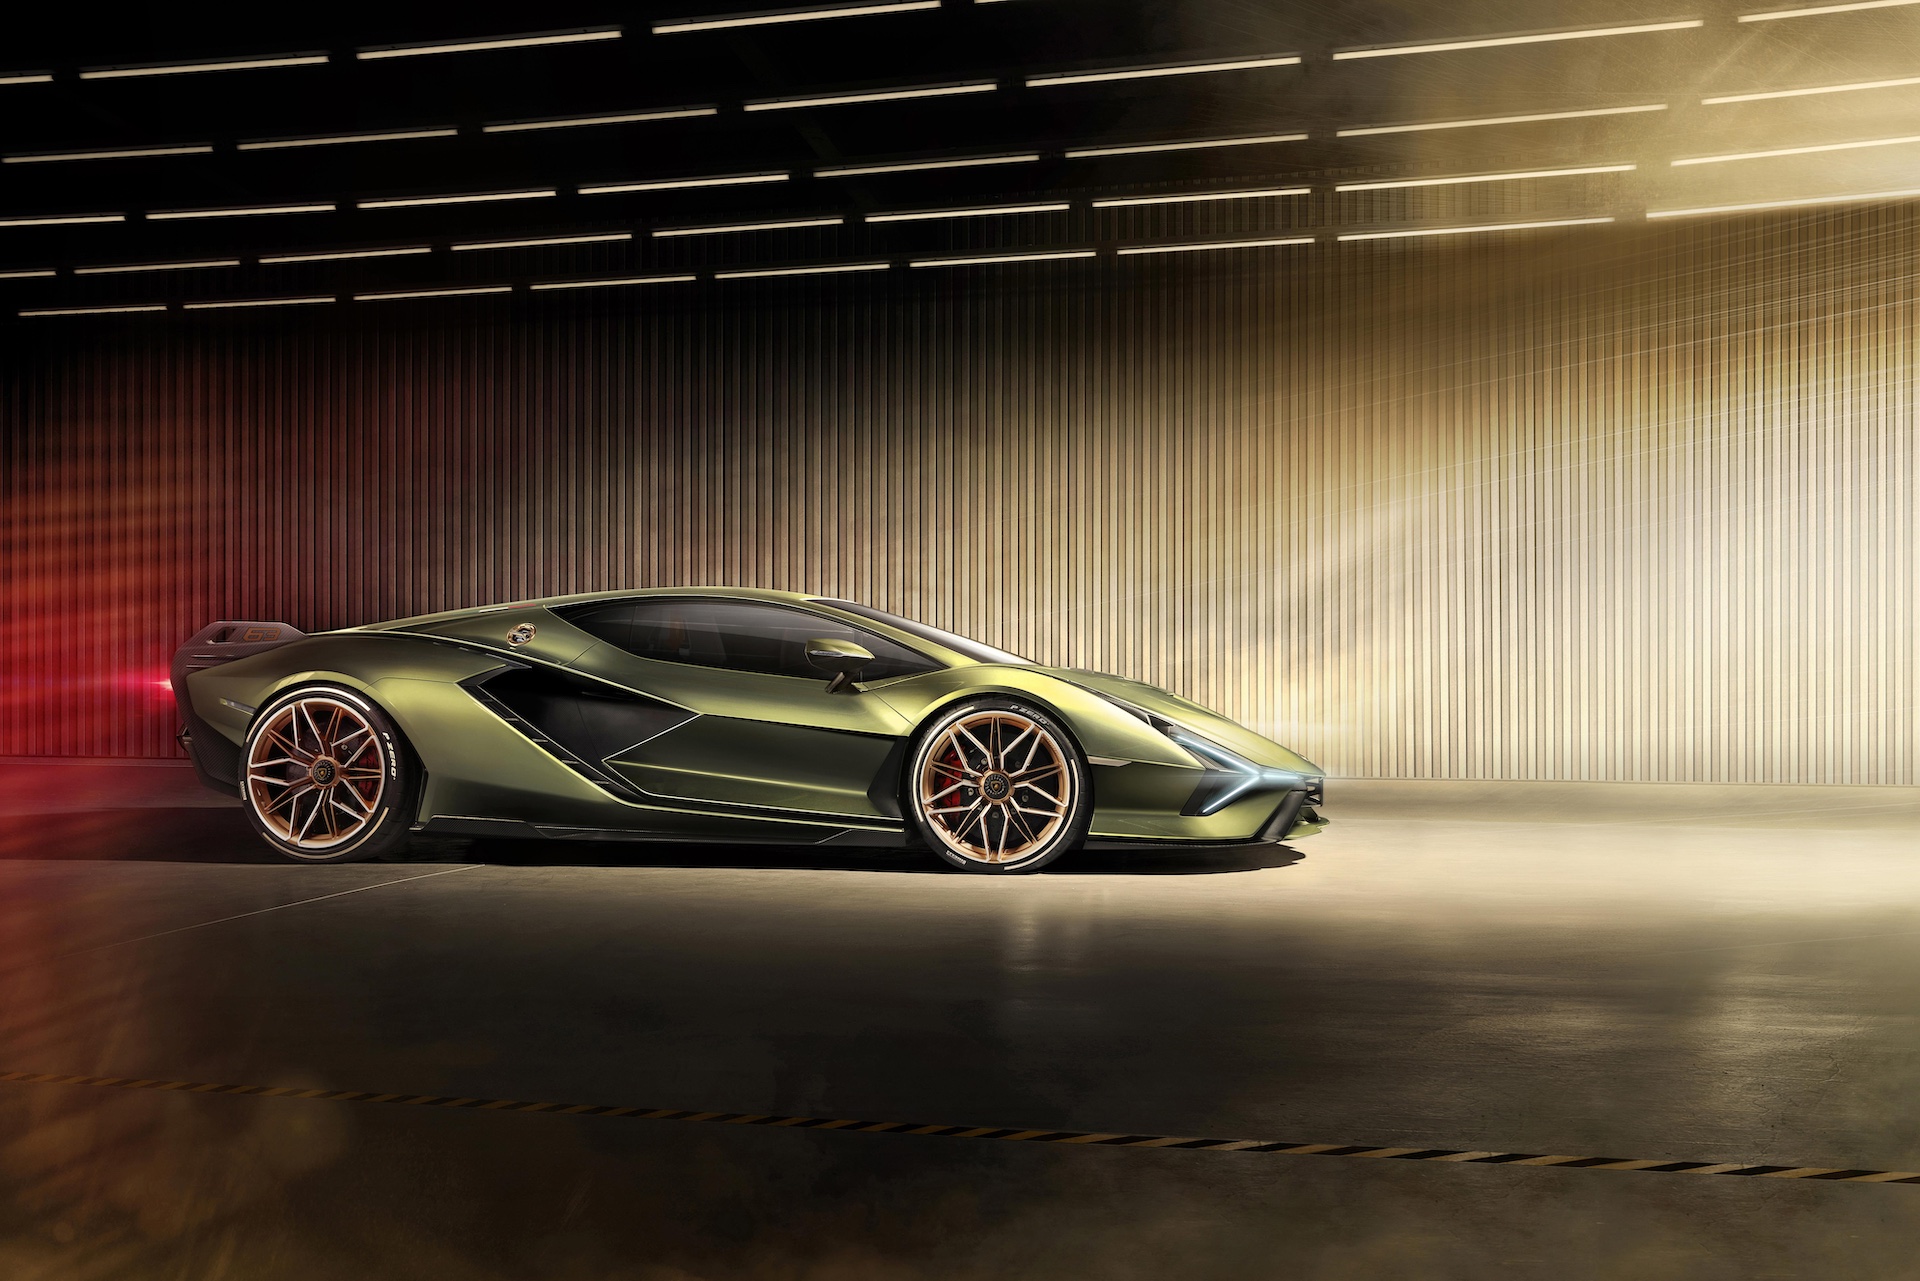 Lamborghini Goes Electric With Debut Of Futuristic Hybrid Sports Car At Frankfurt Motor Show